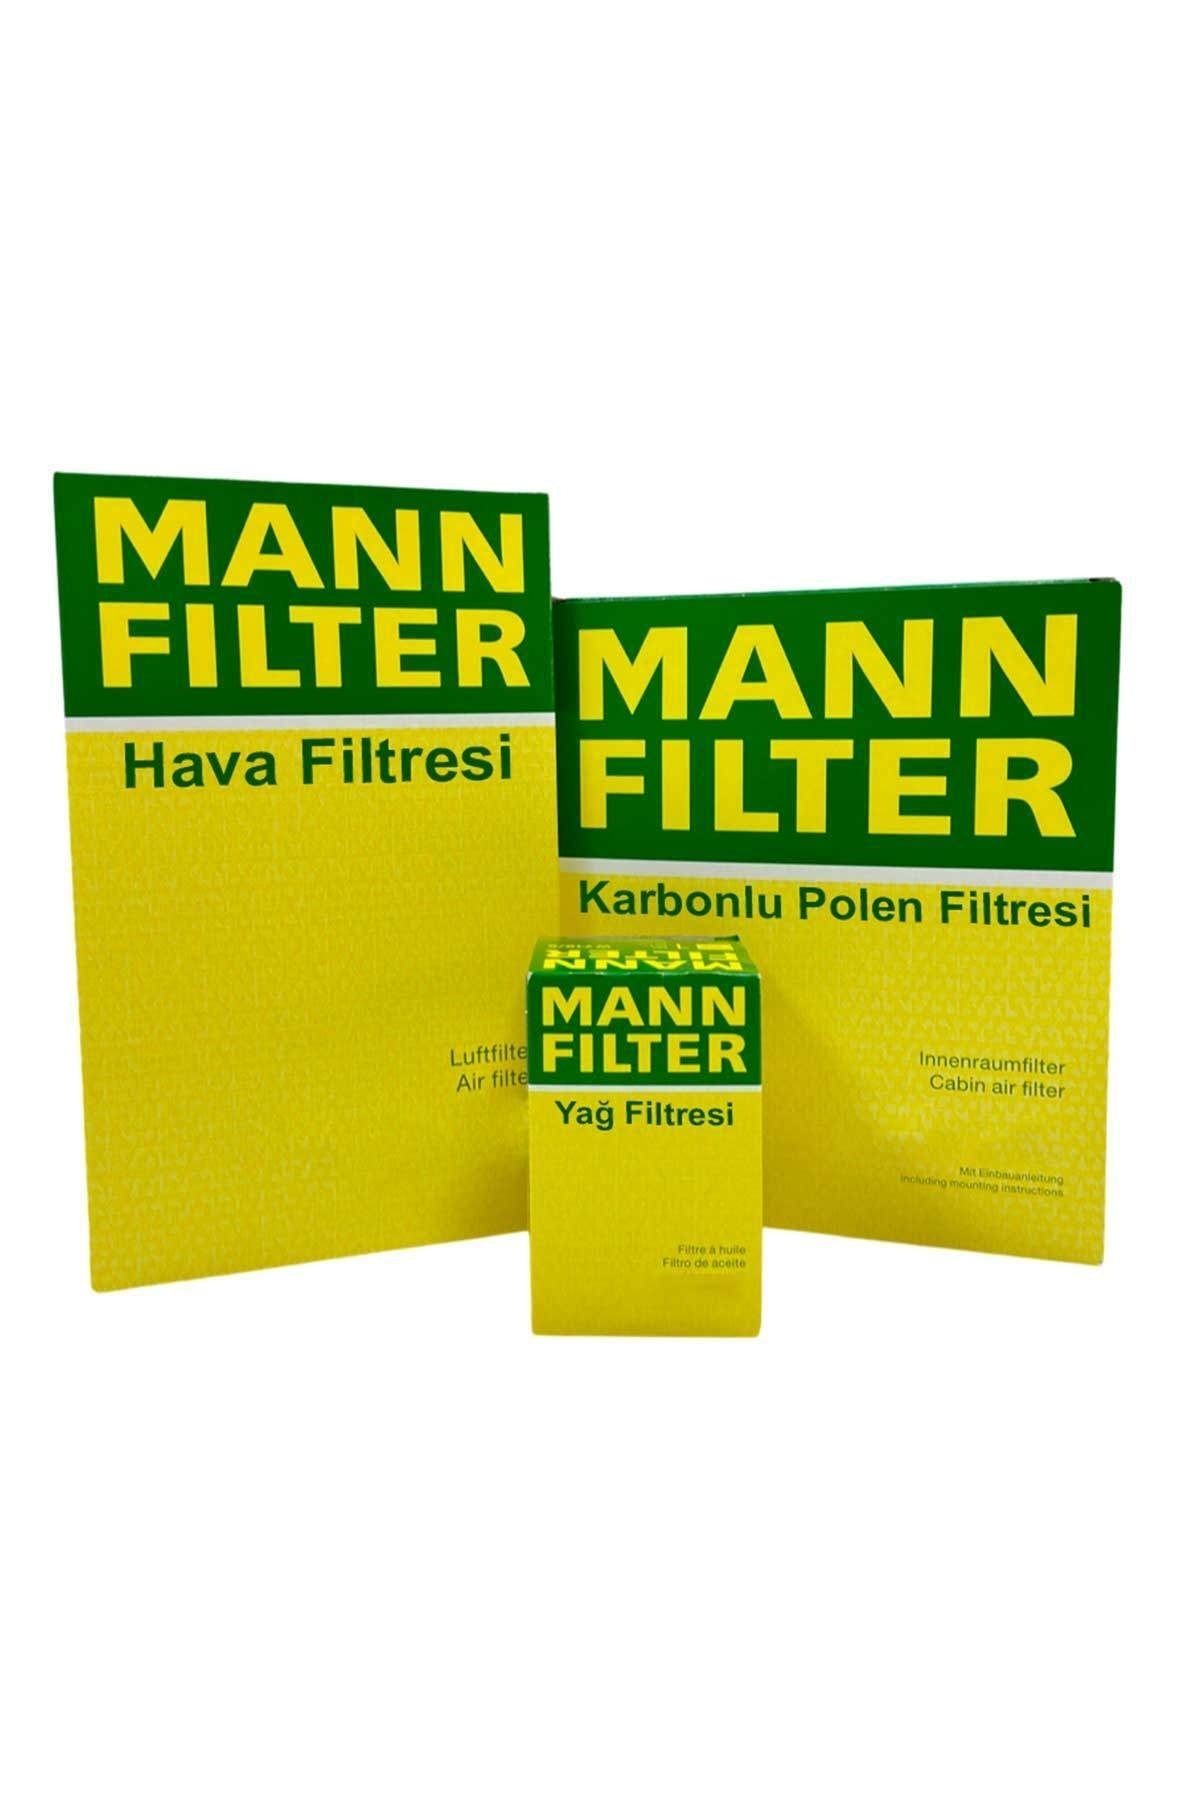 Mann Filter Uzmanparça Vw Golf 7 1.0 Tsı Benzinli Mann Filtre Bakım Seti 2015-2019 | Hava+yağ+karbonlu Polen